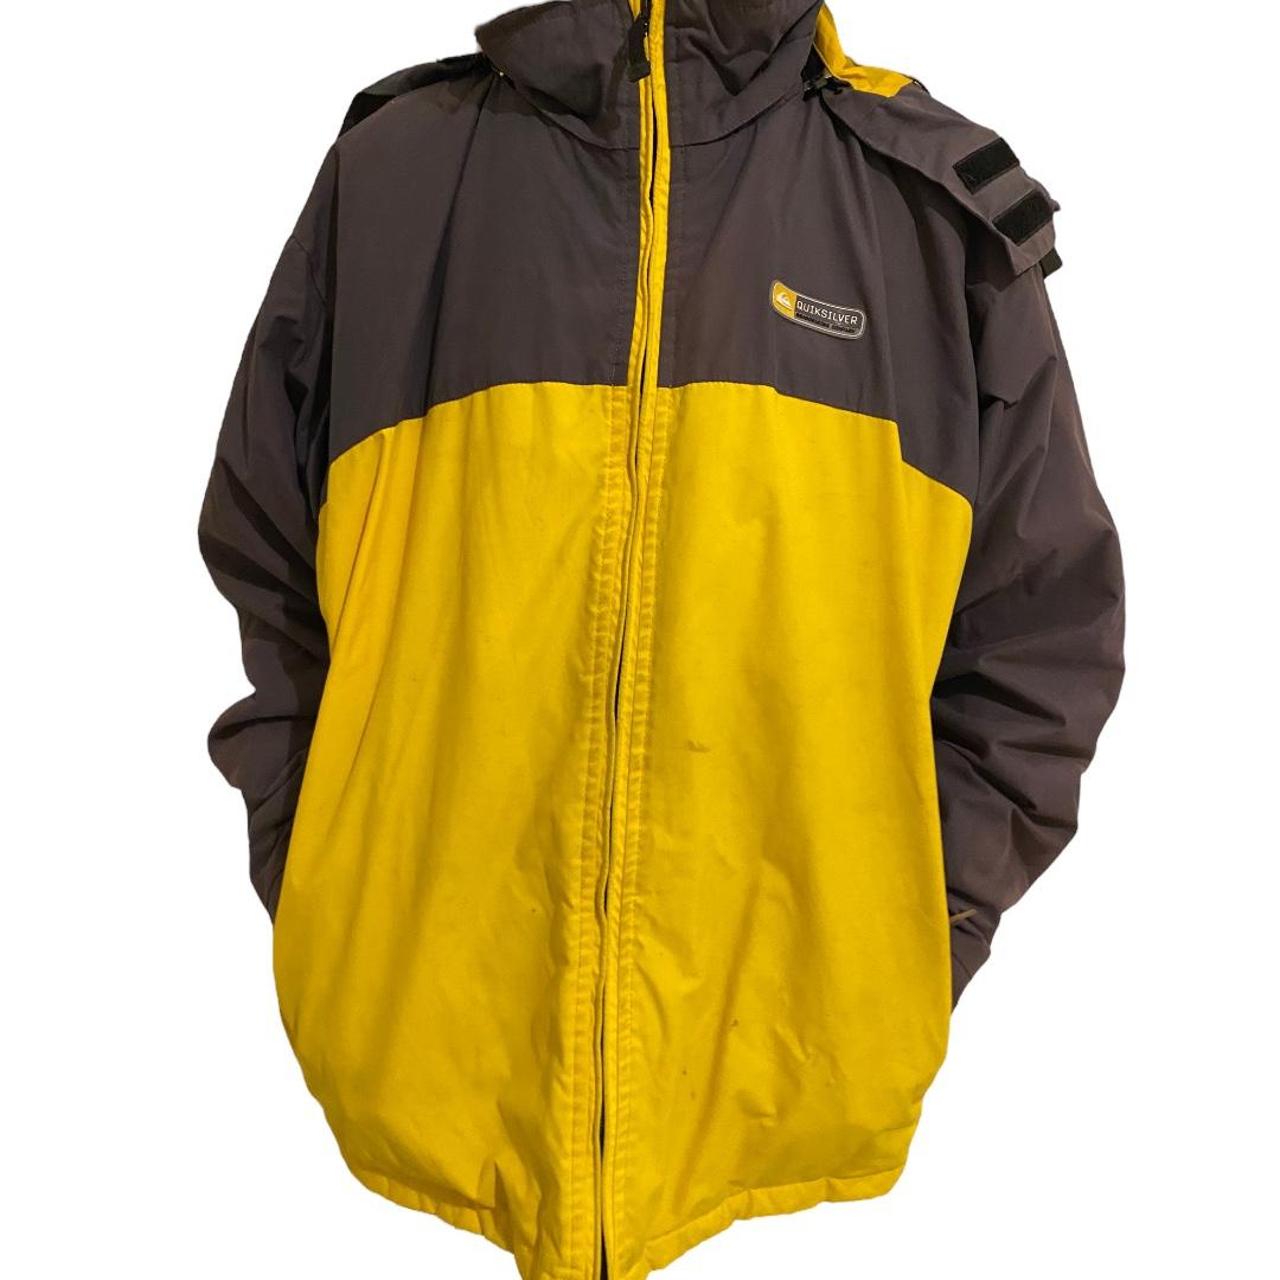 Quiksilver snowboarding company ski jacket in a... - Depop